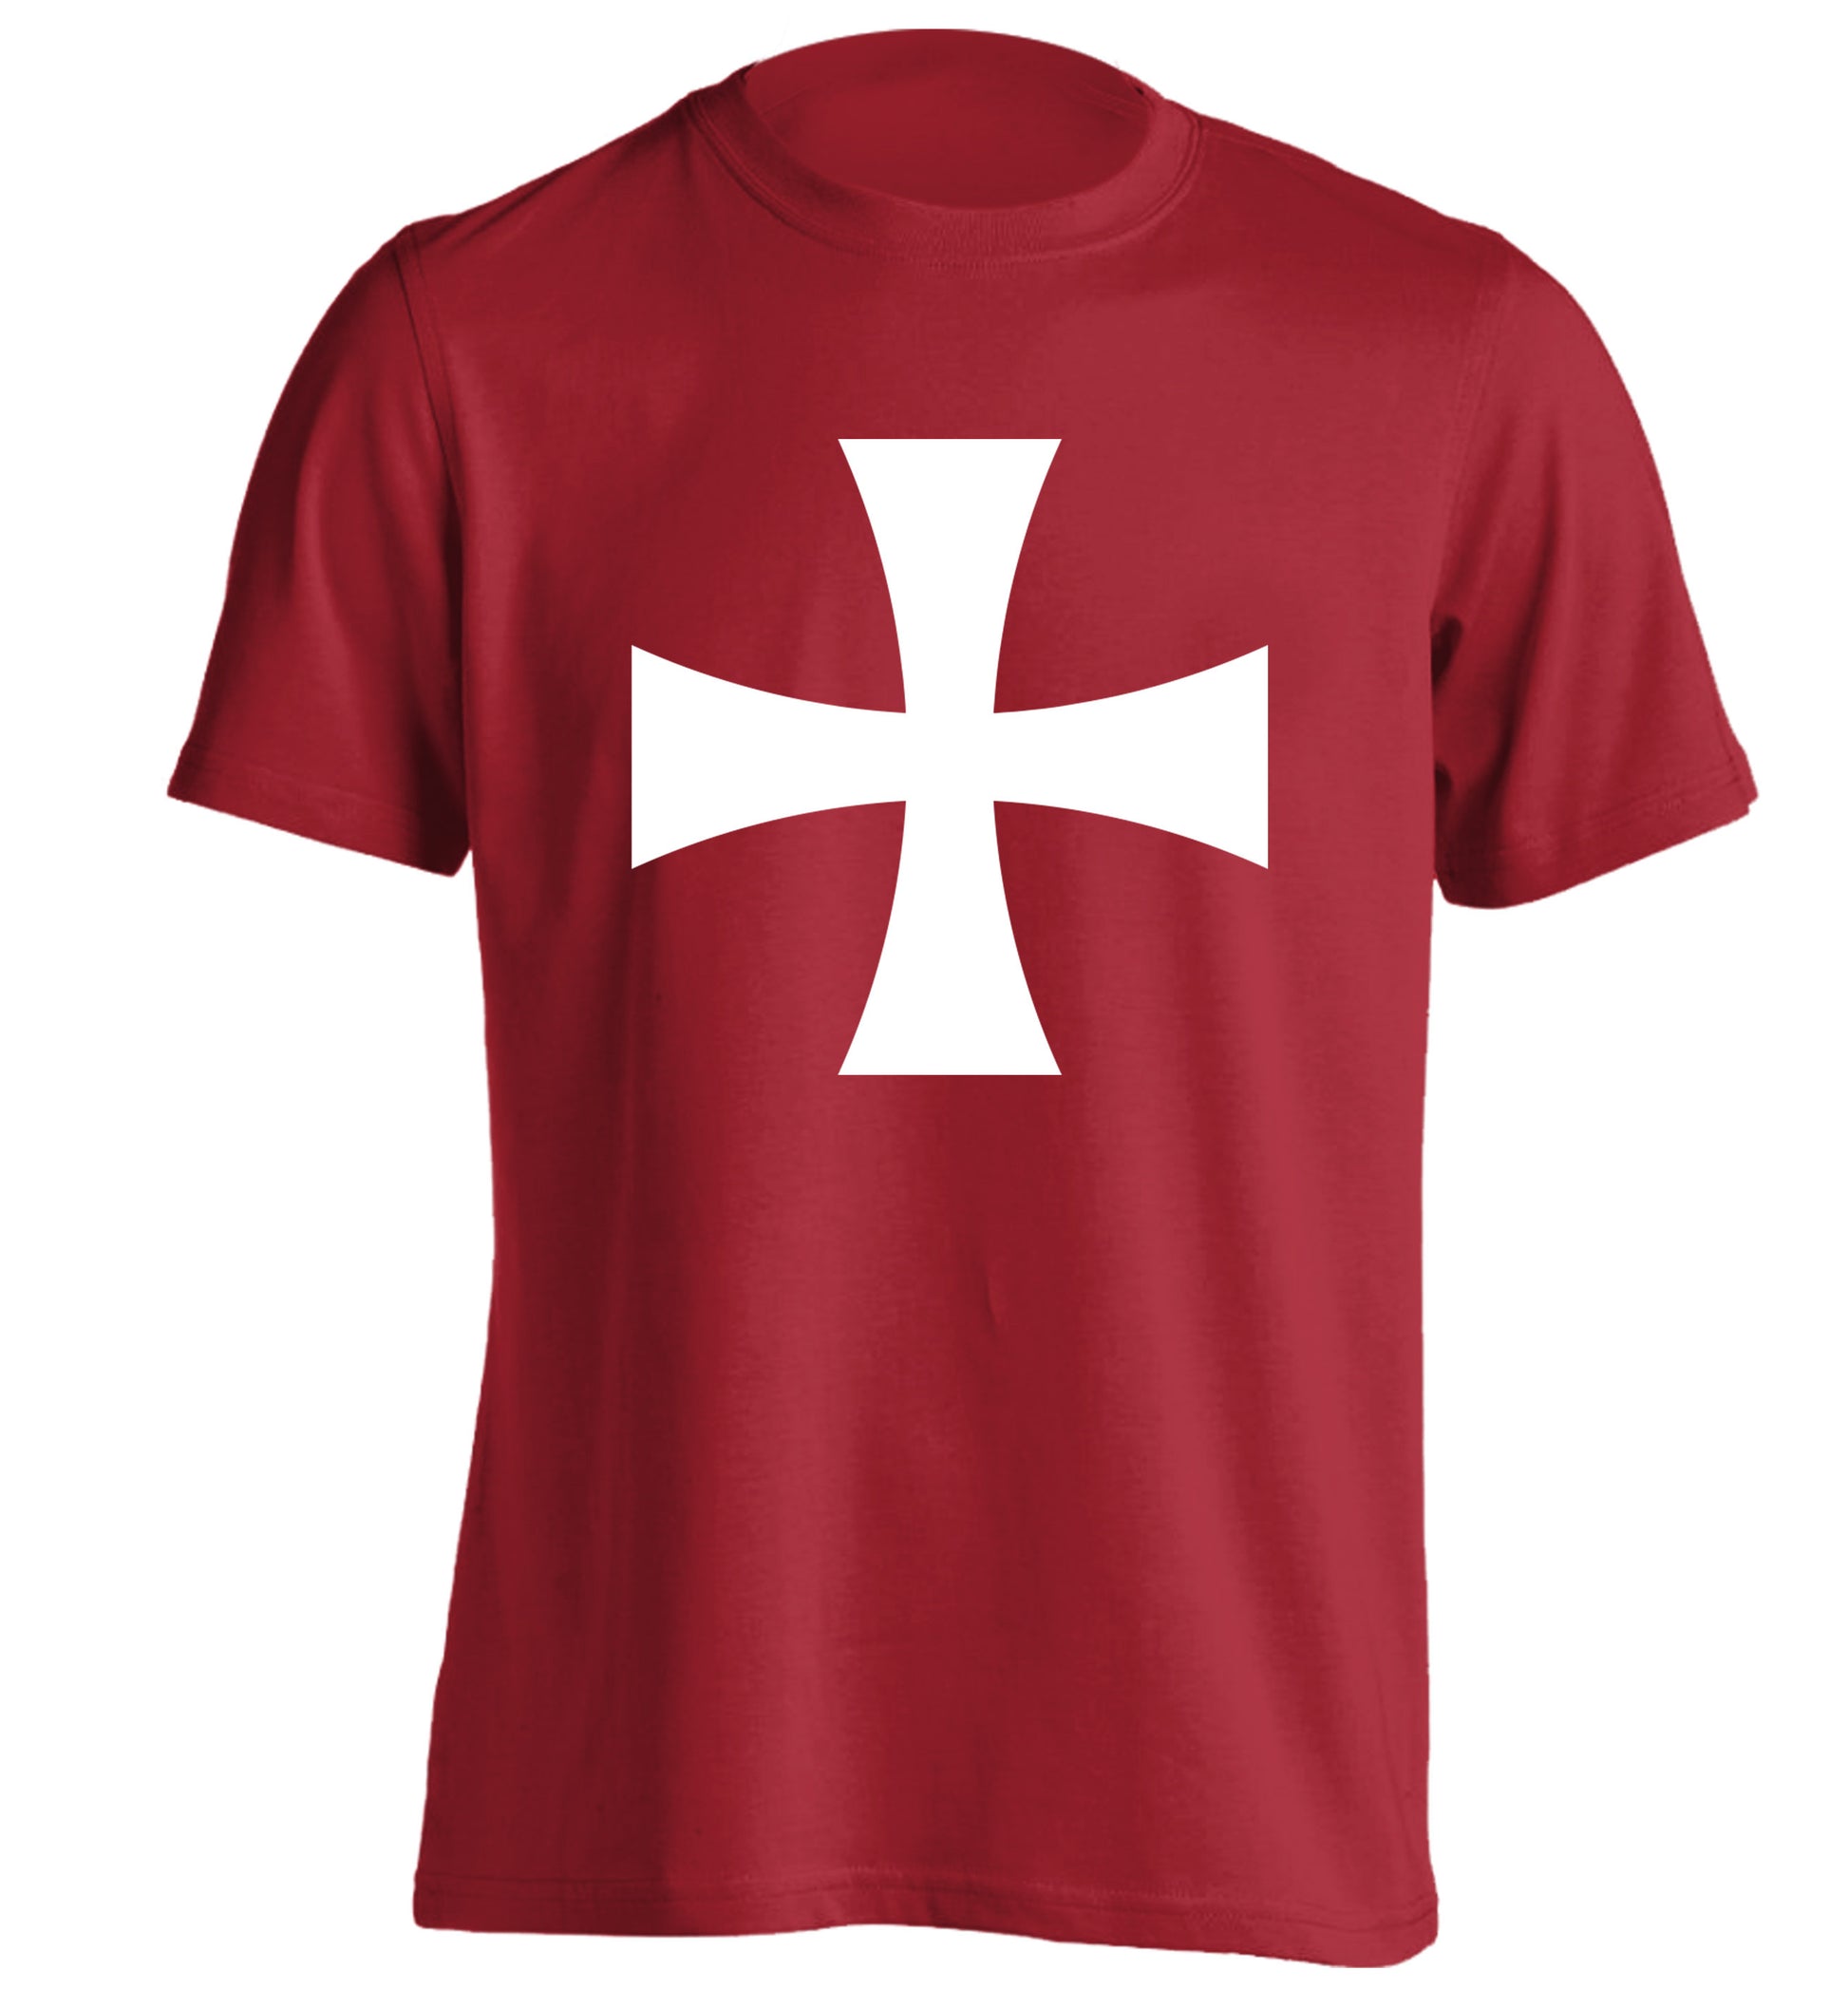 Knights Templar cross adults unisex red Tshirt 2XL